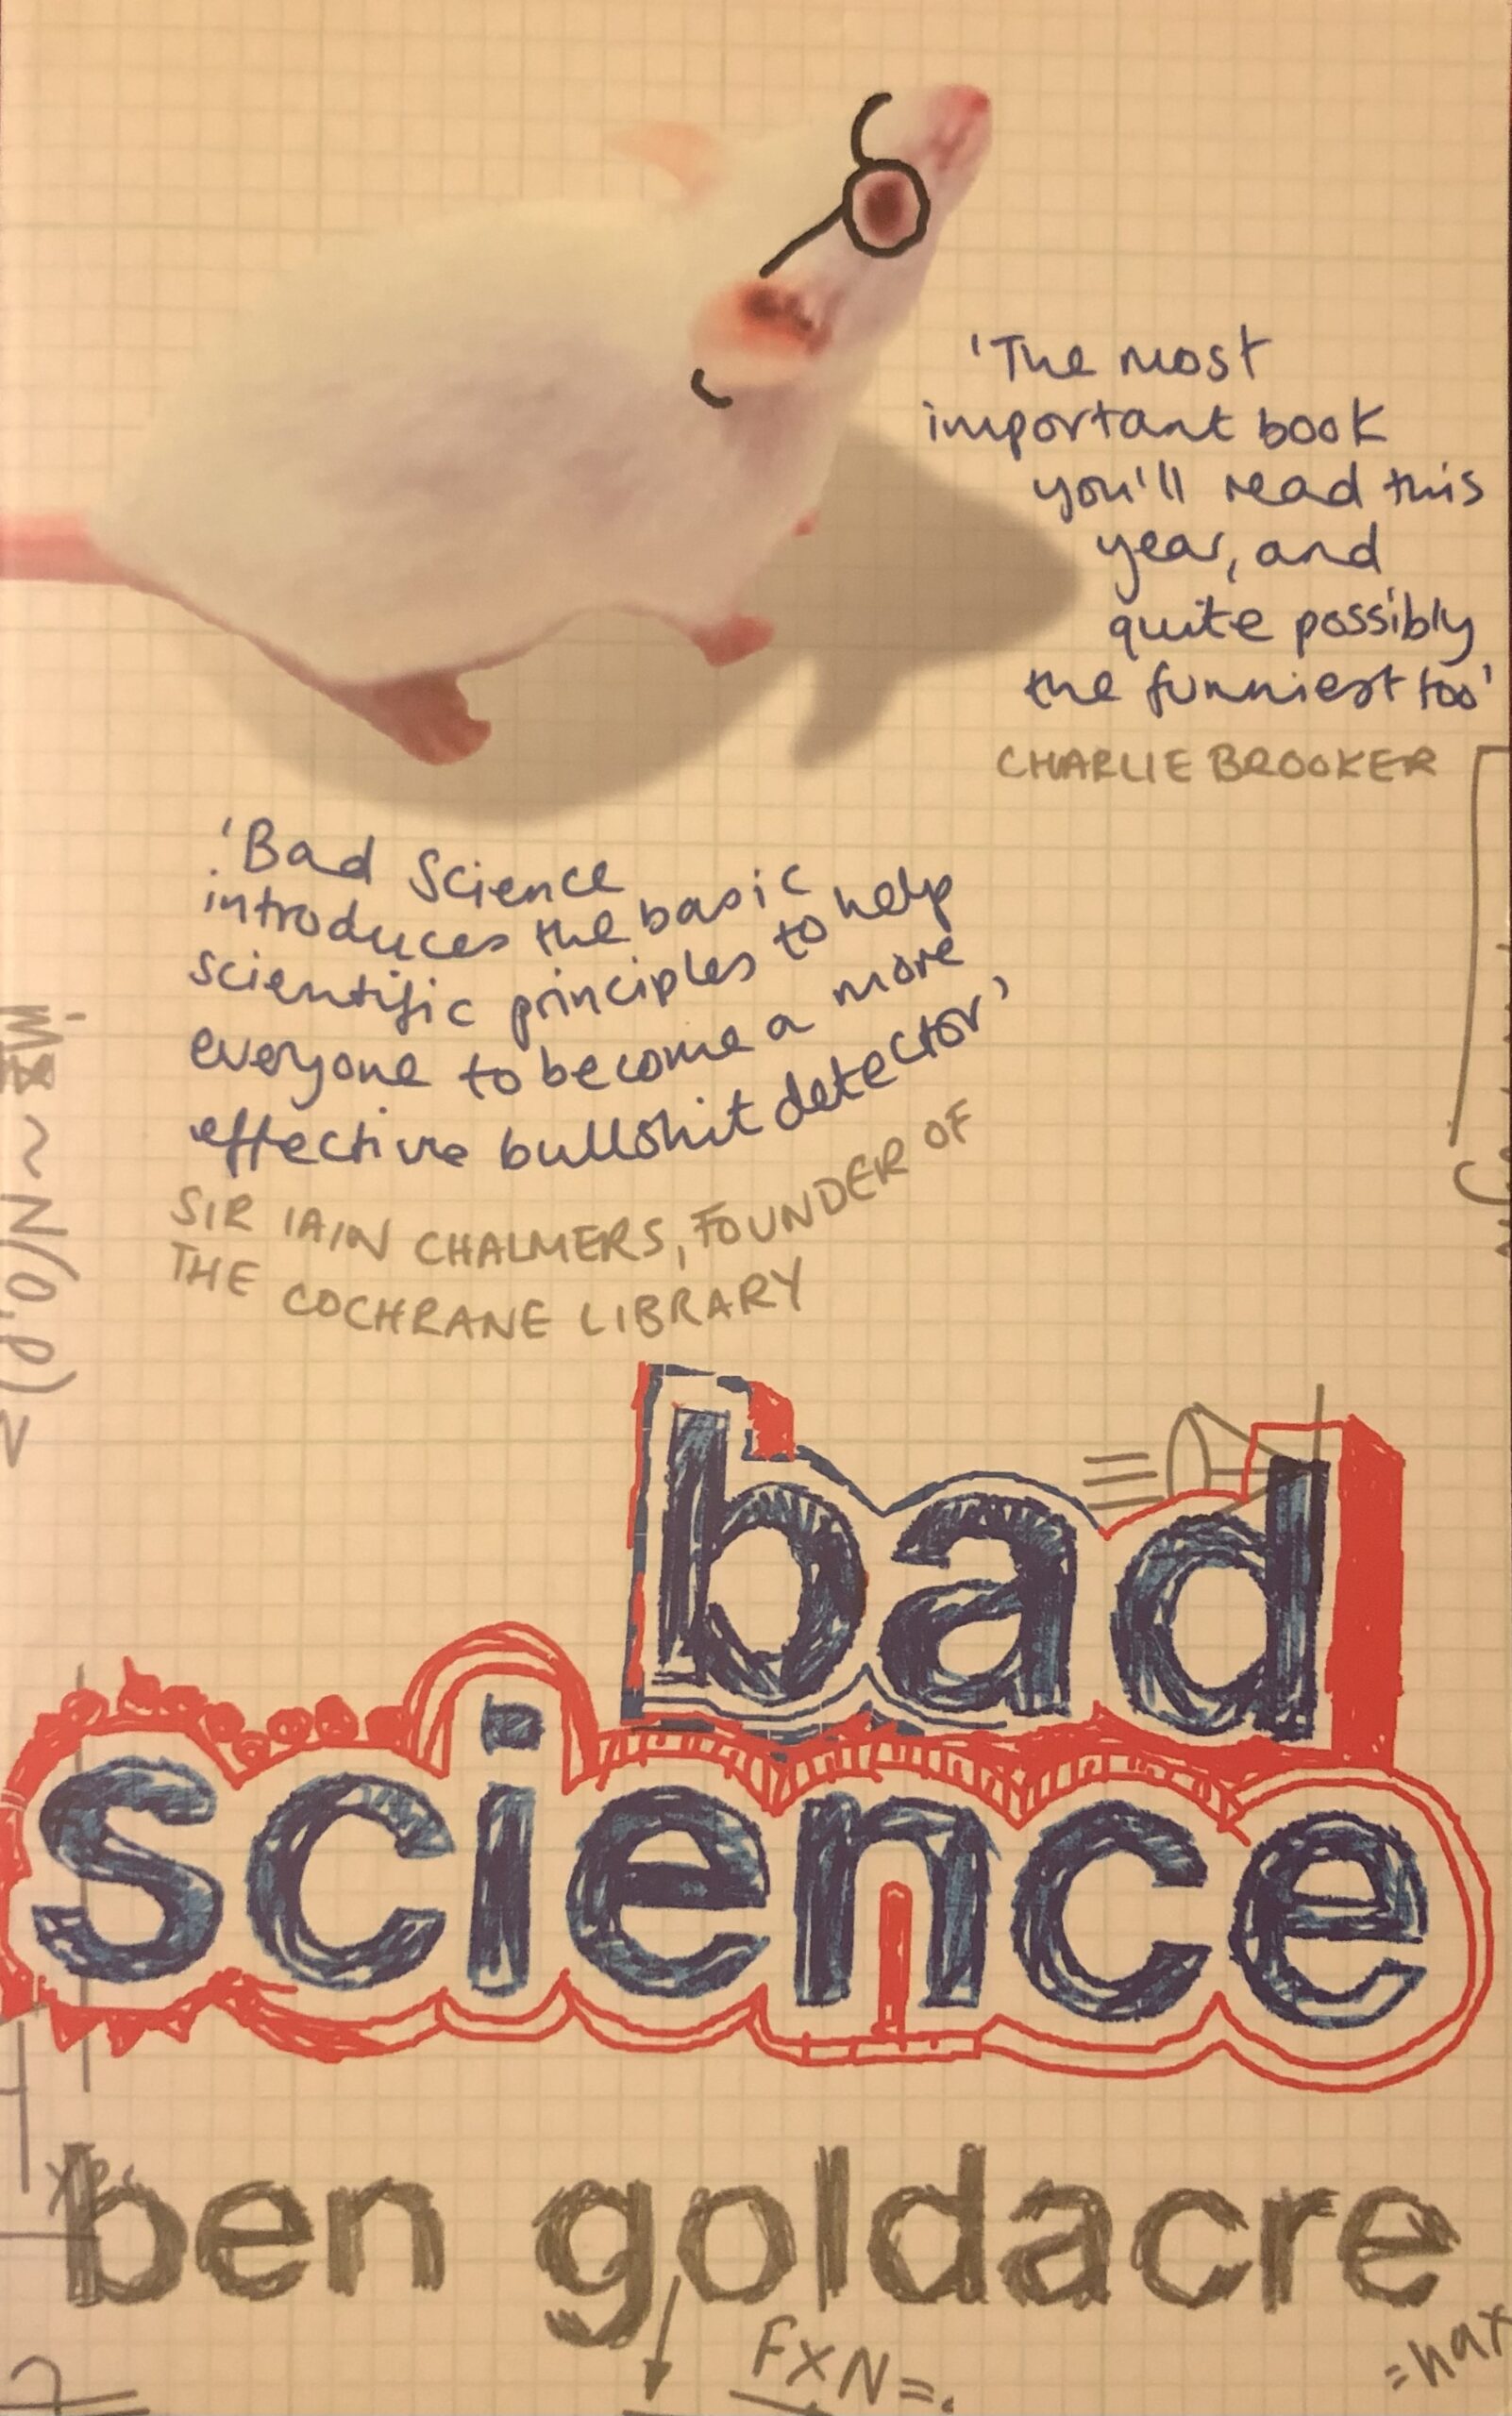 Bad Science By Ben Goldacre